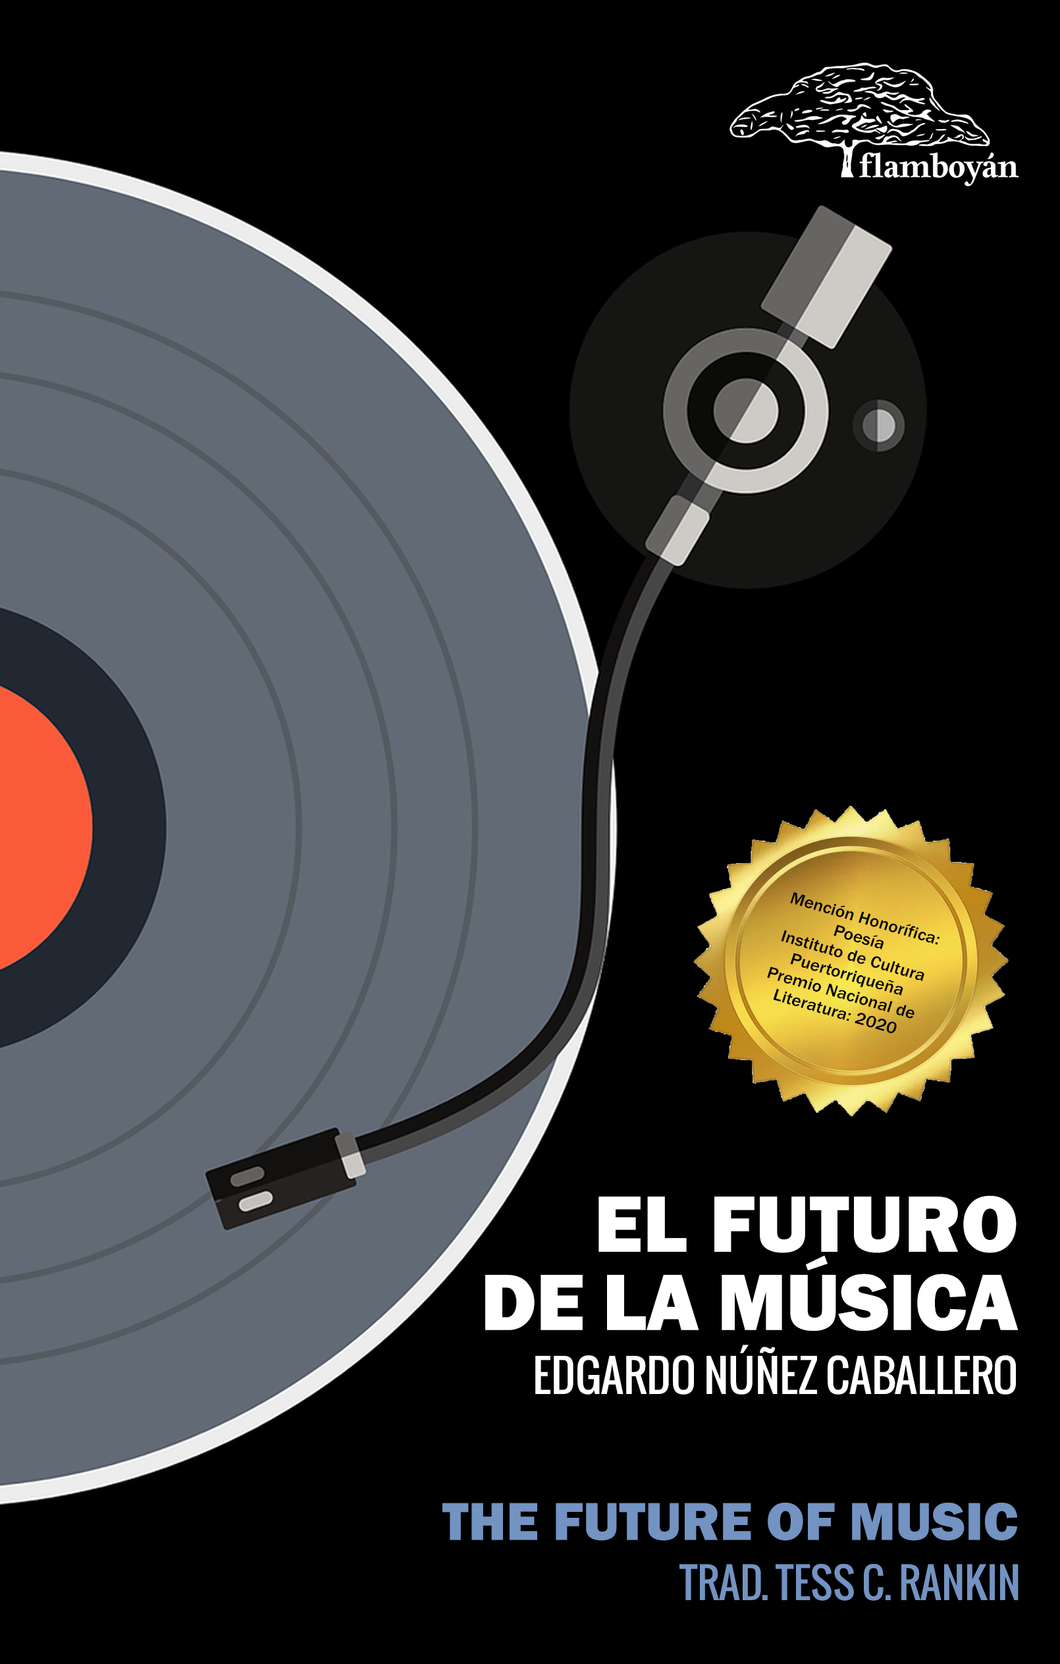 El futuro de la música: Edgardo Núñez Caballero